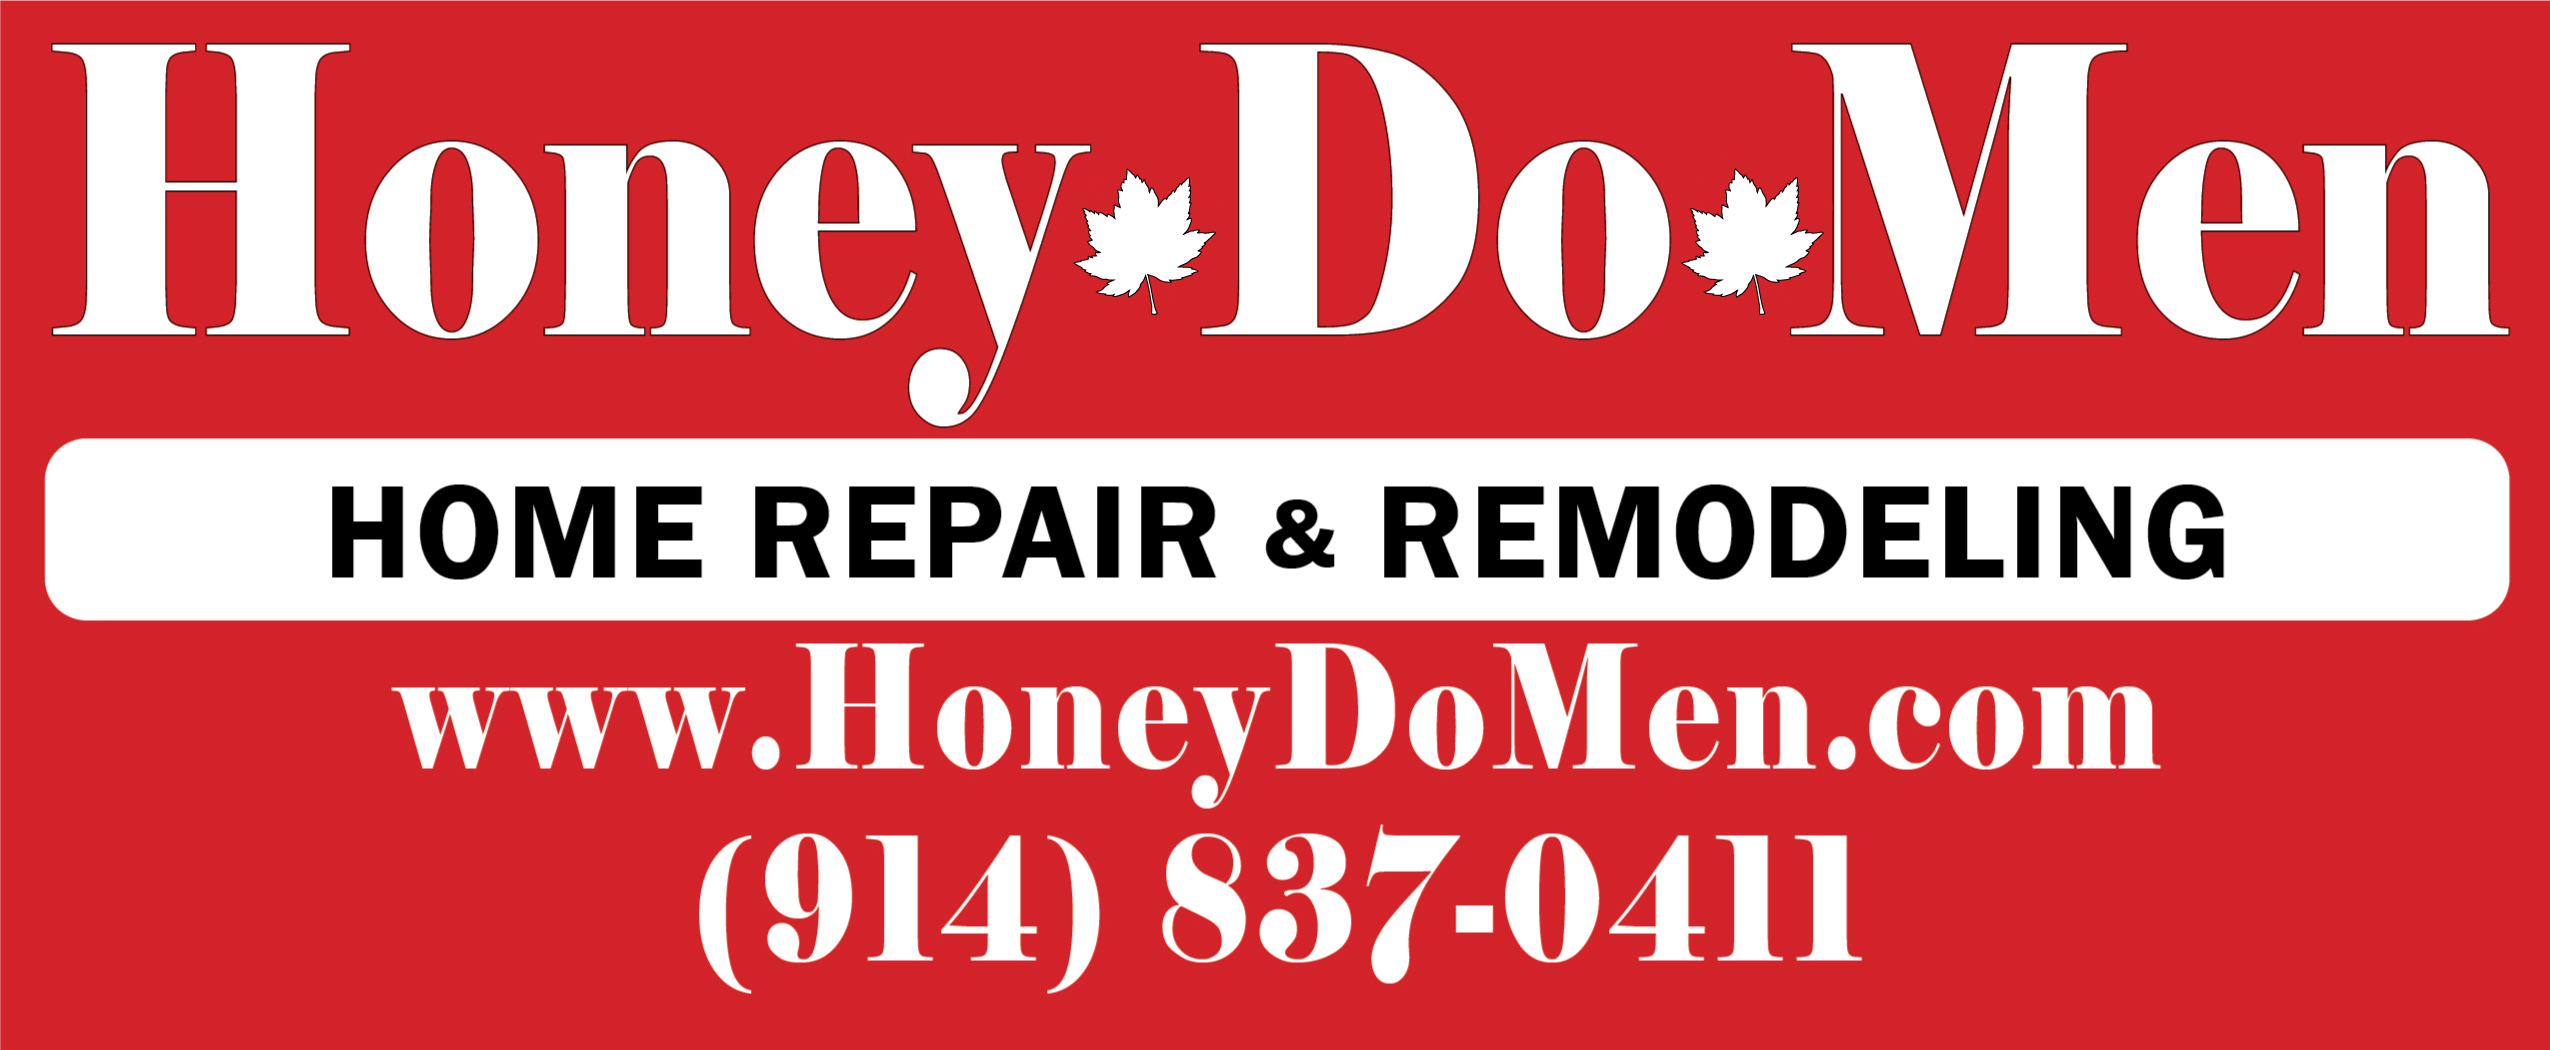 Honey Do Men Home Remodeling Repair Cover Image